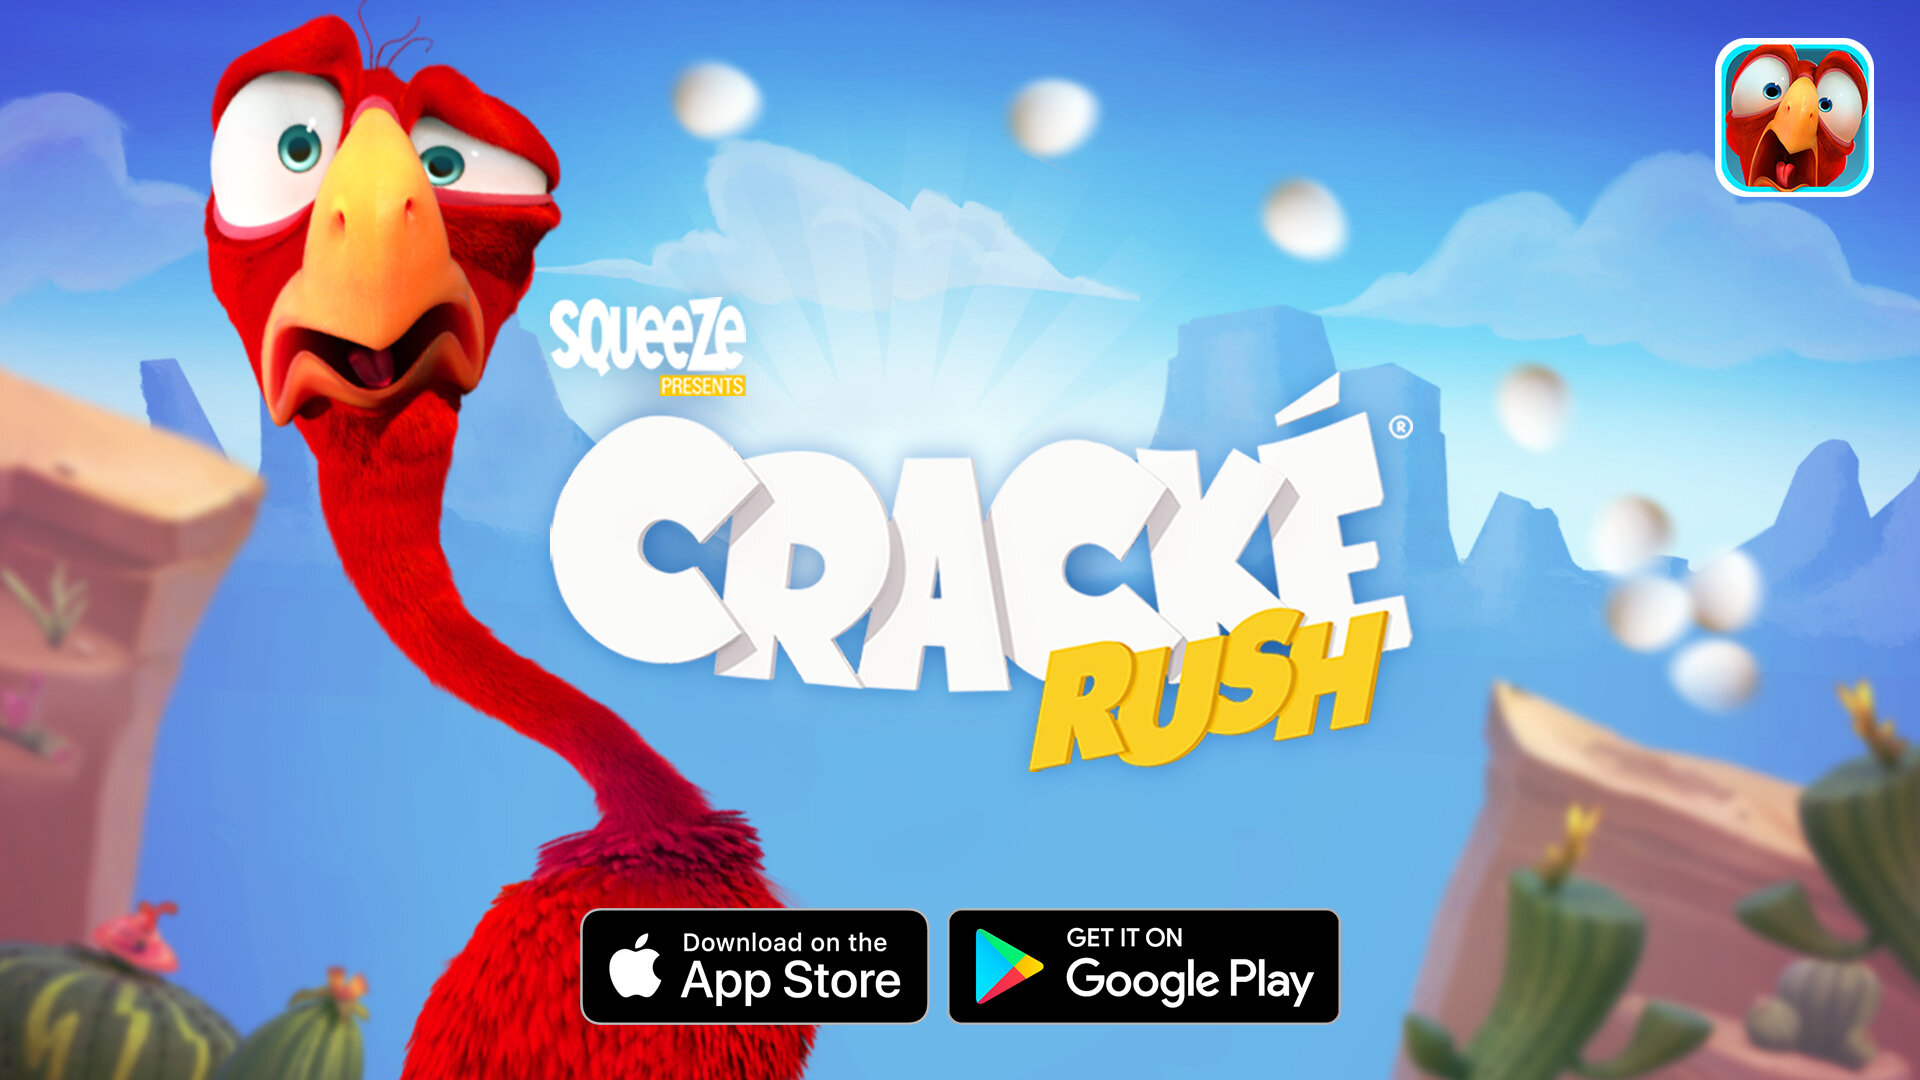 Launch of Cracké Rush | Squeeze Animation Studios